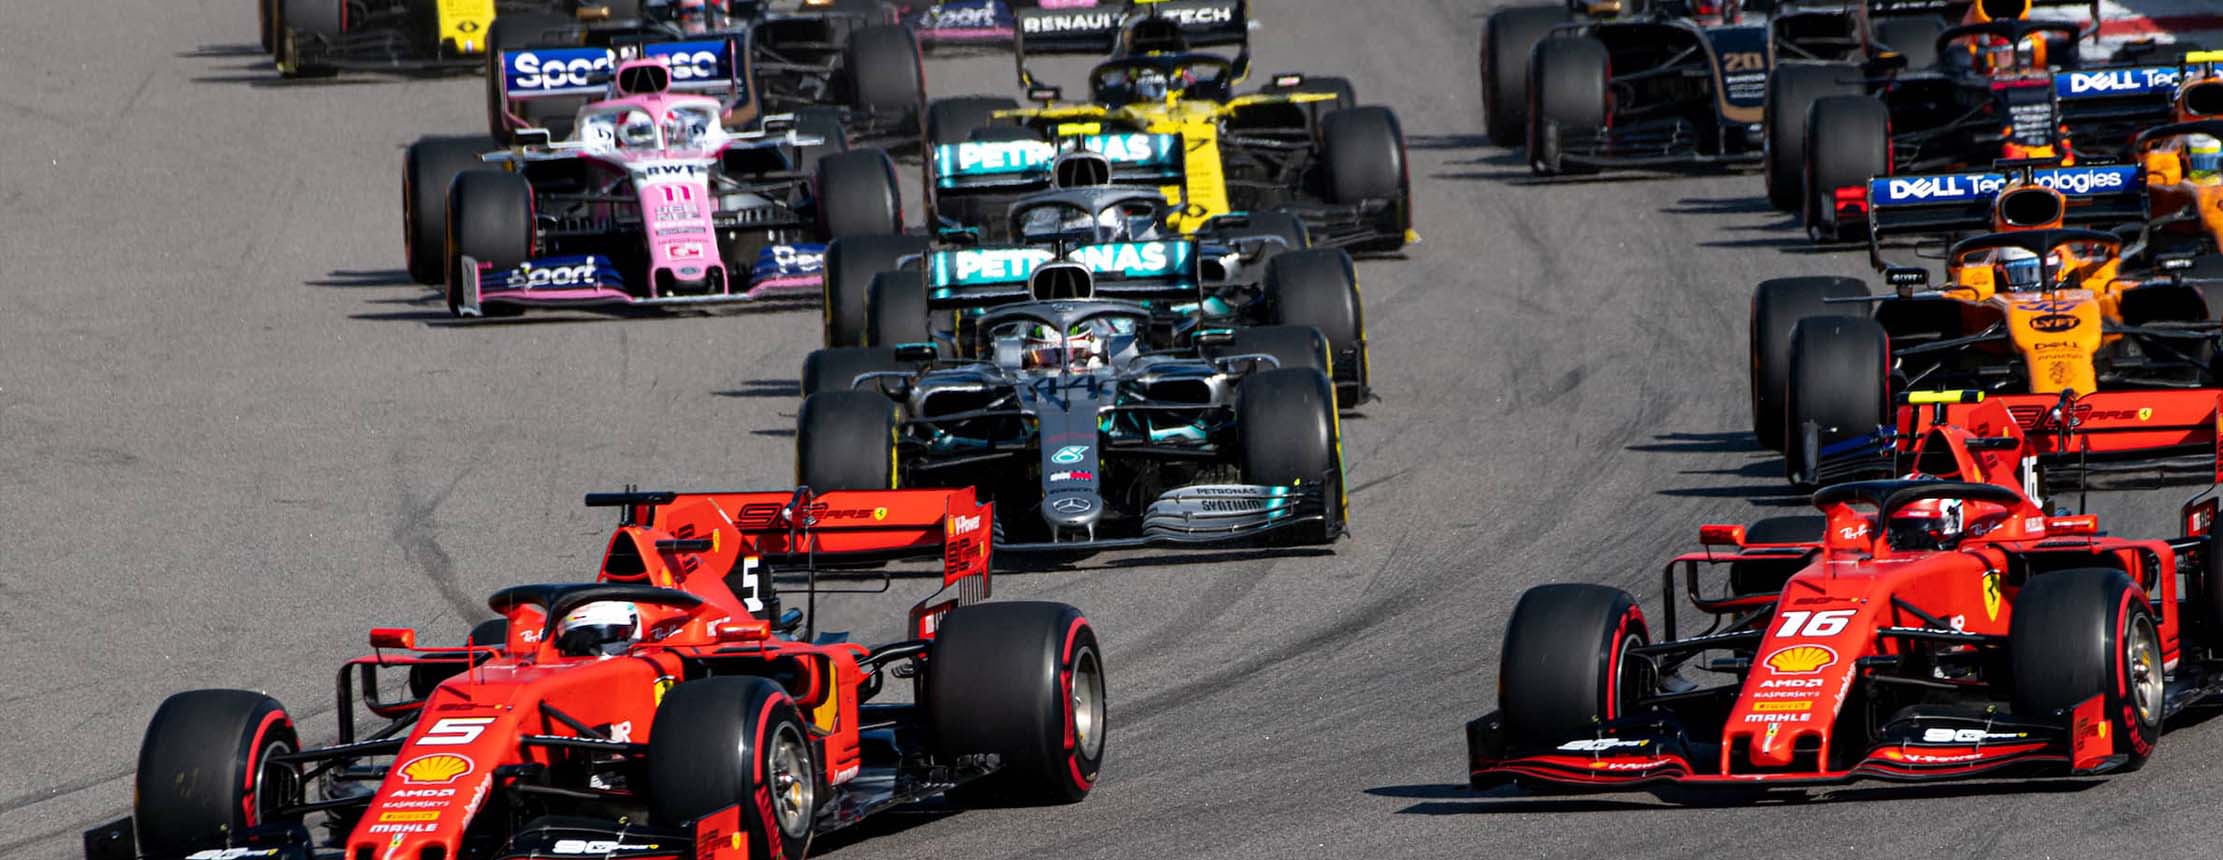 Race start at formula 1 grand prix of russia 2019